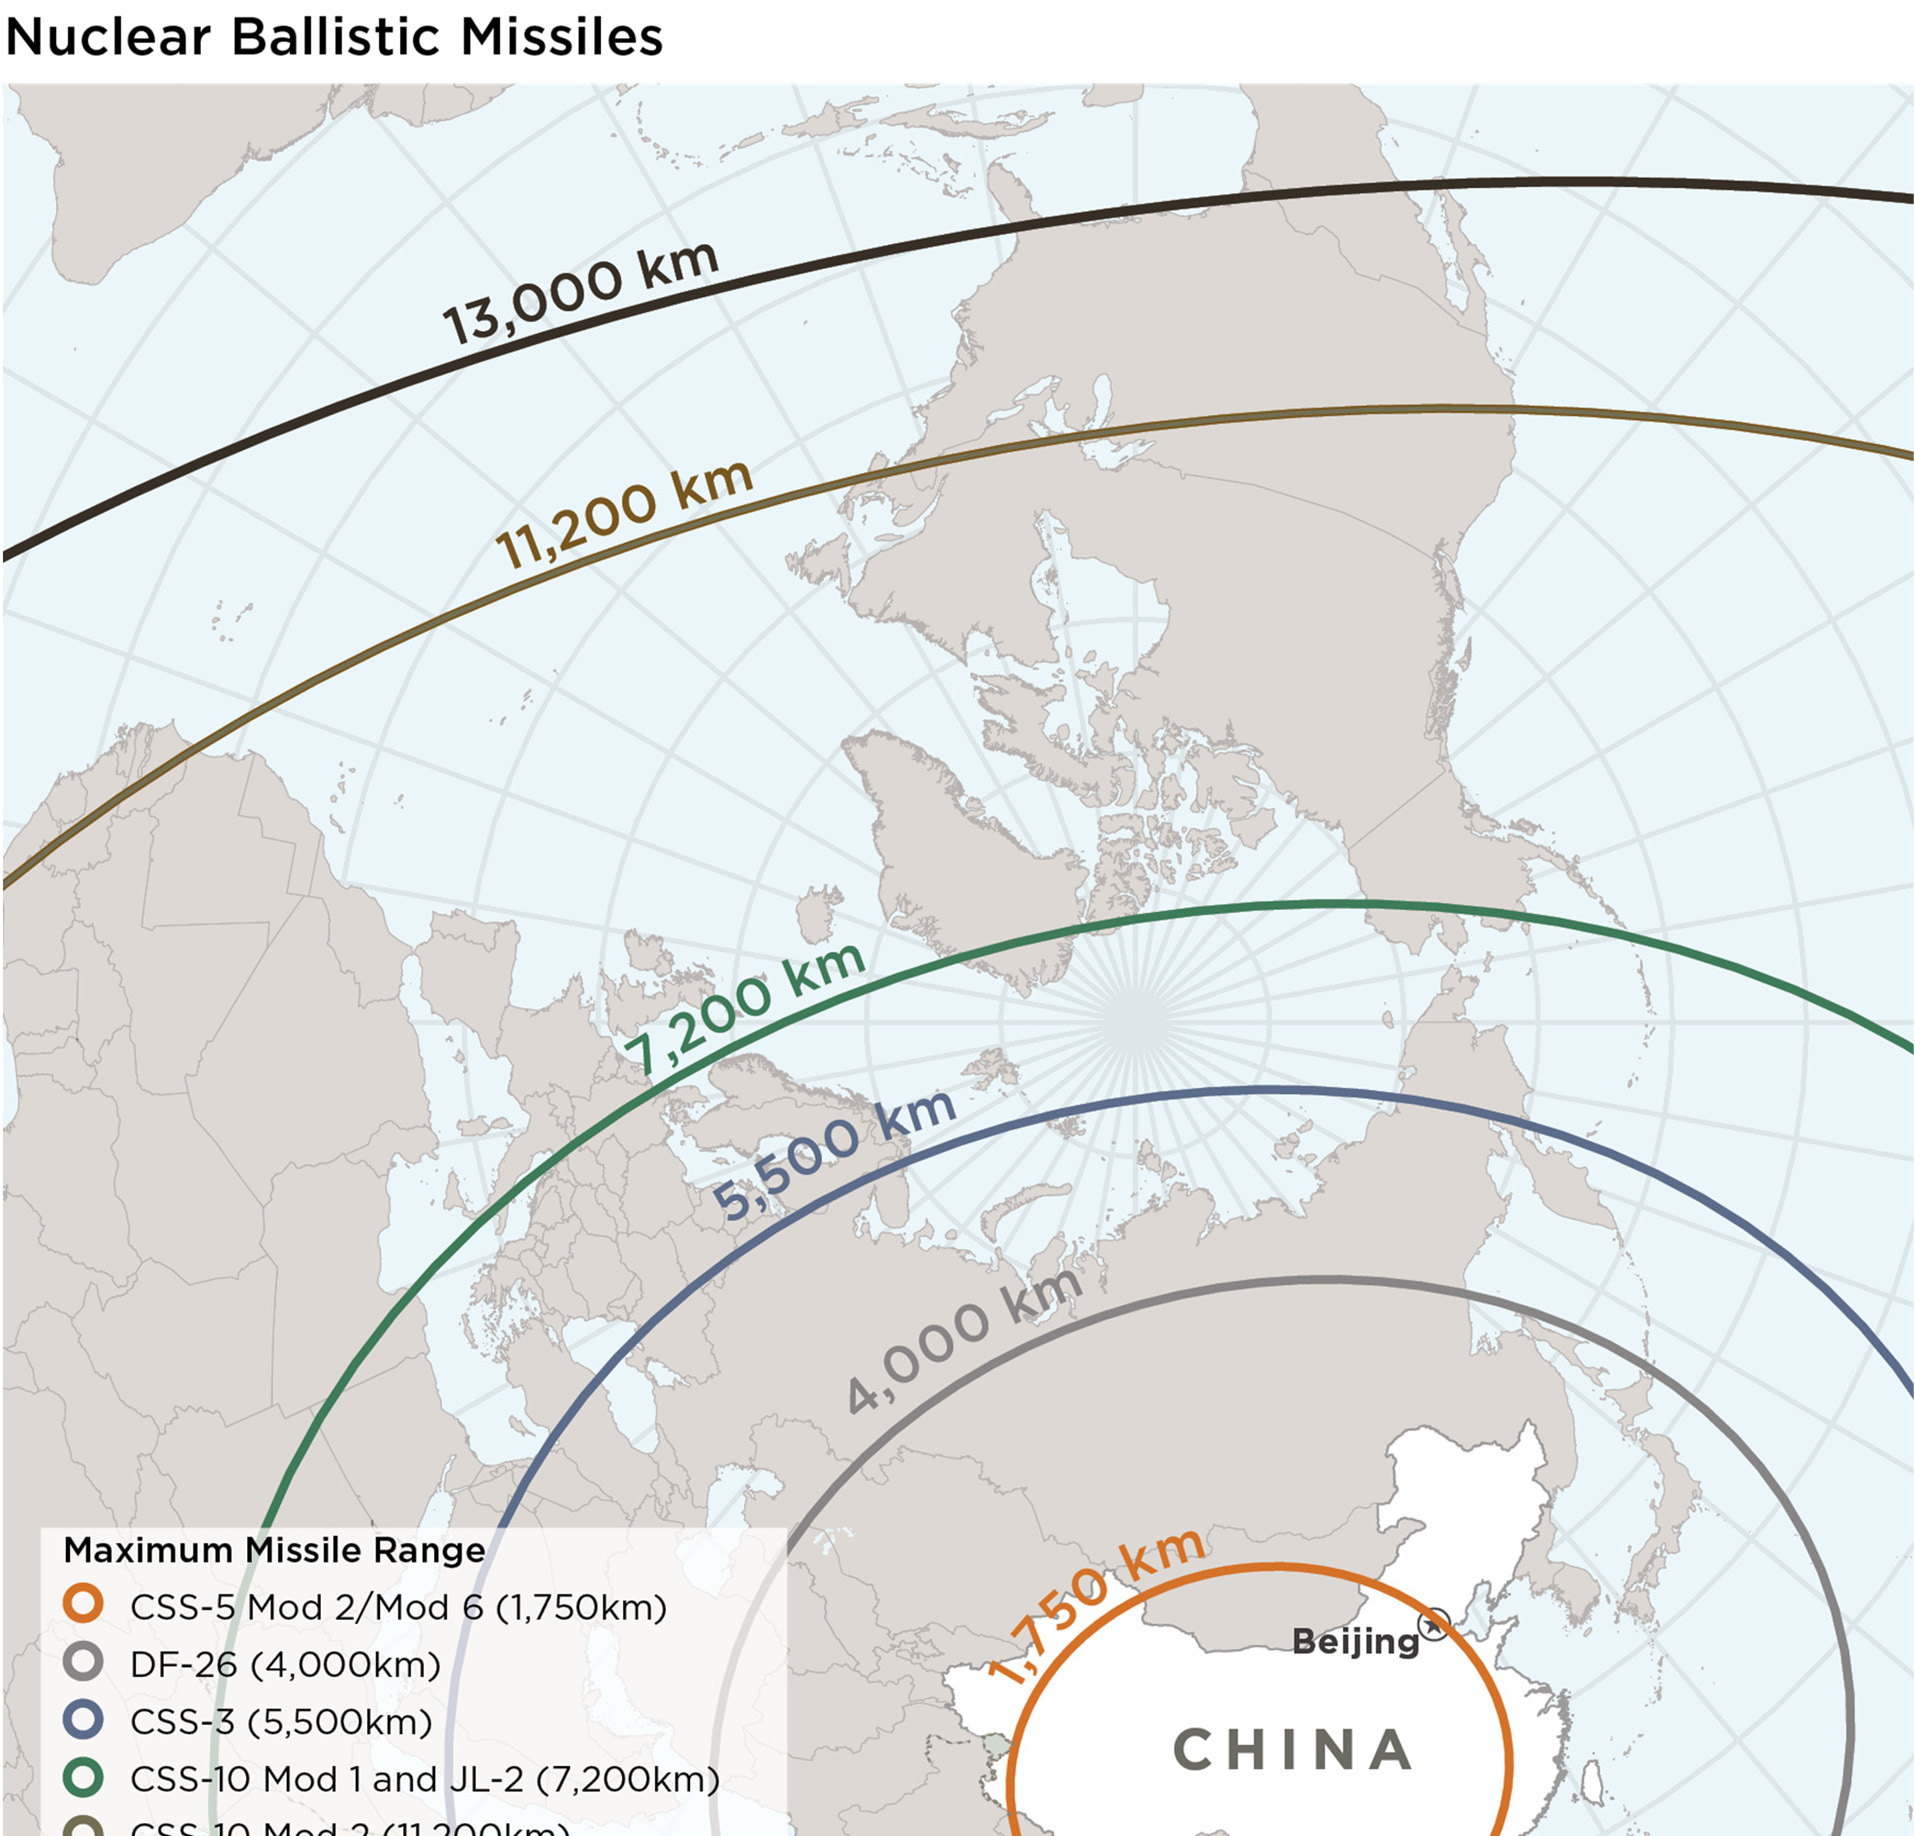 Nuclear ballistic missiles